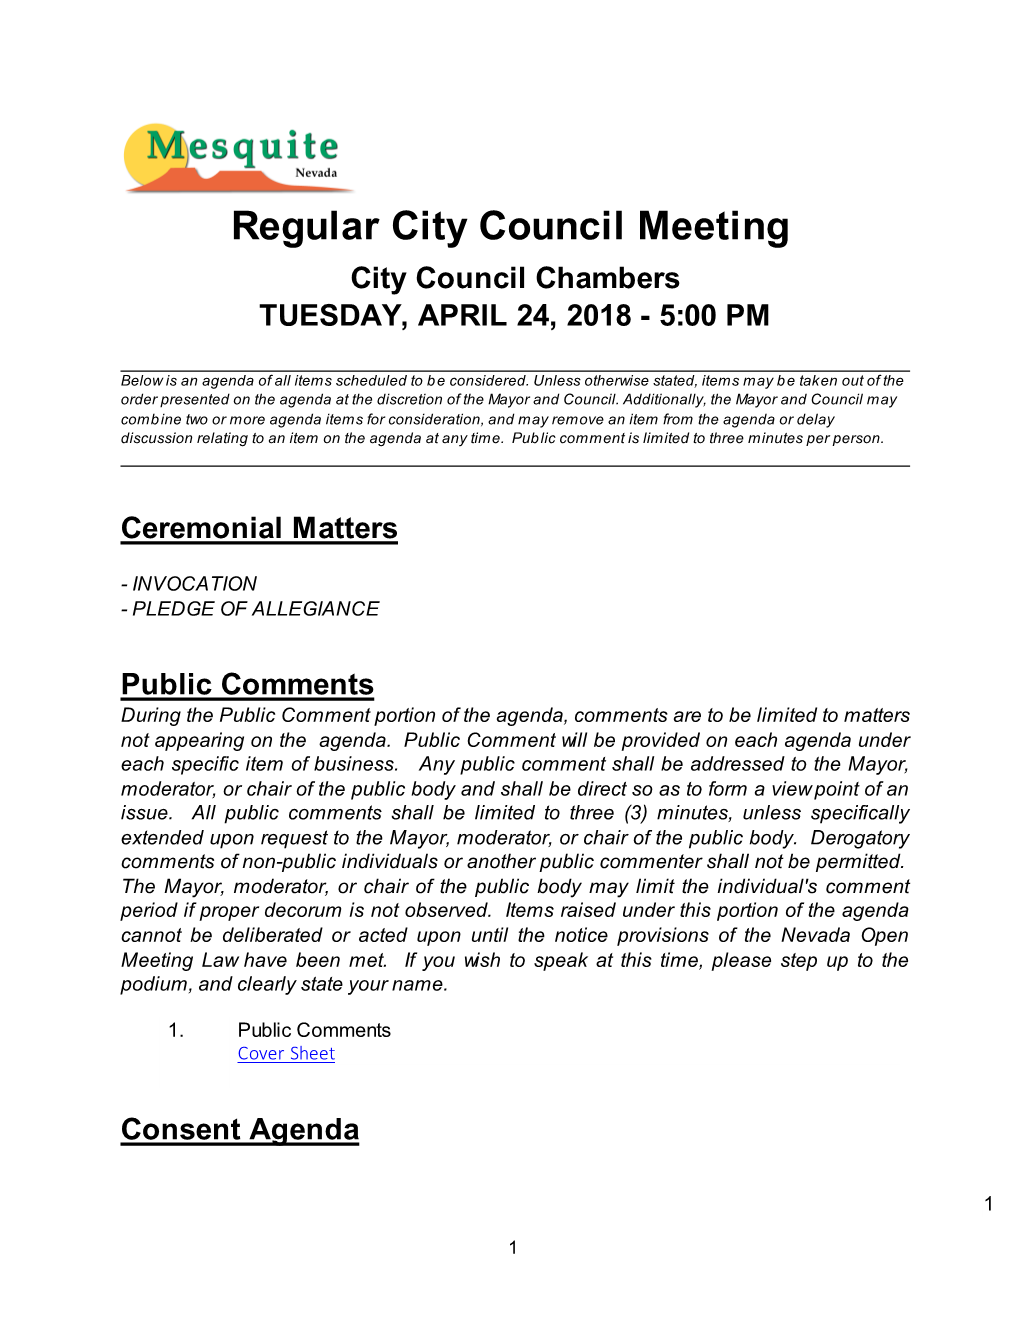 Regular City Council Meeting City Council Chambers TUESDAY, APRIL 24, 2018 - 5:00 PM